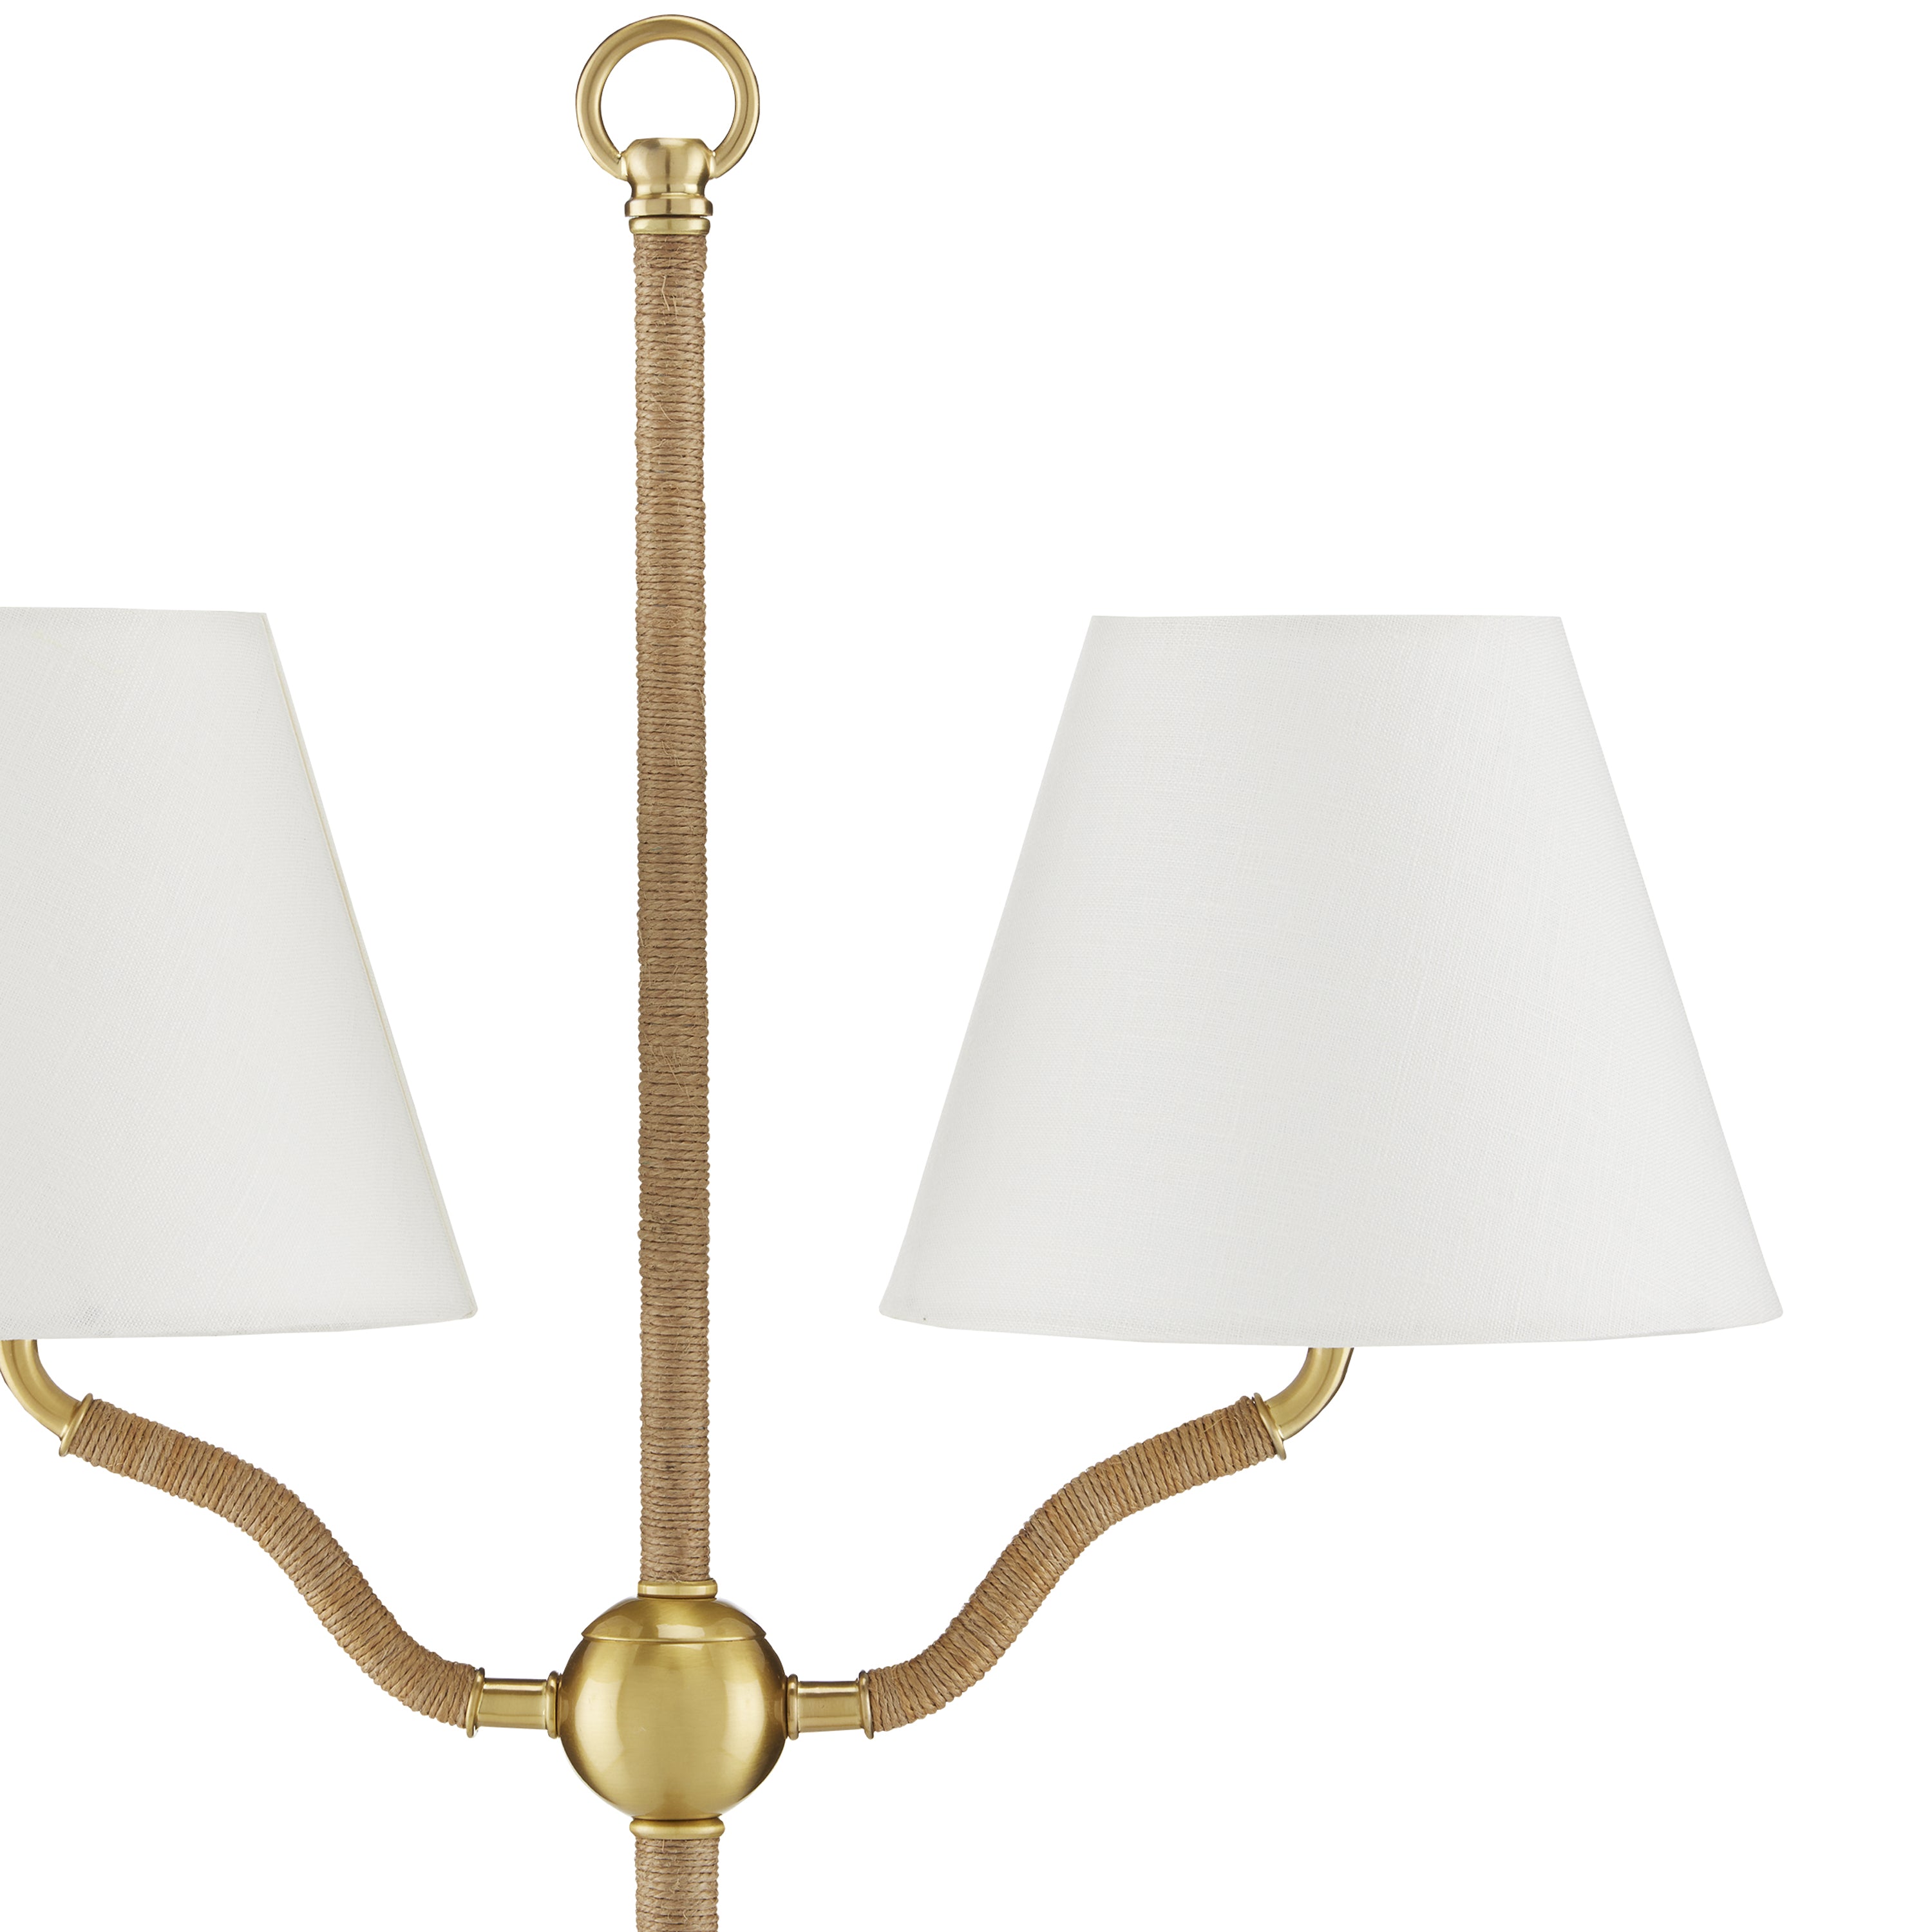 Currey & Company, Sirocco Brass Floor Lamp